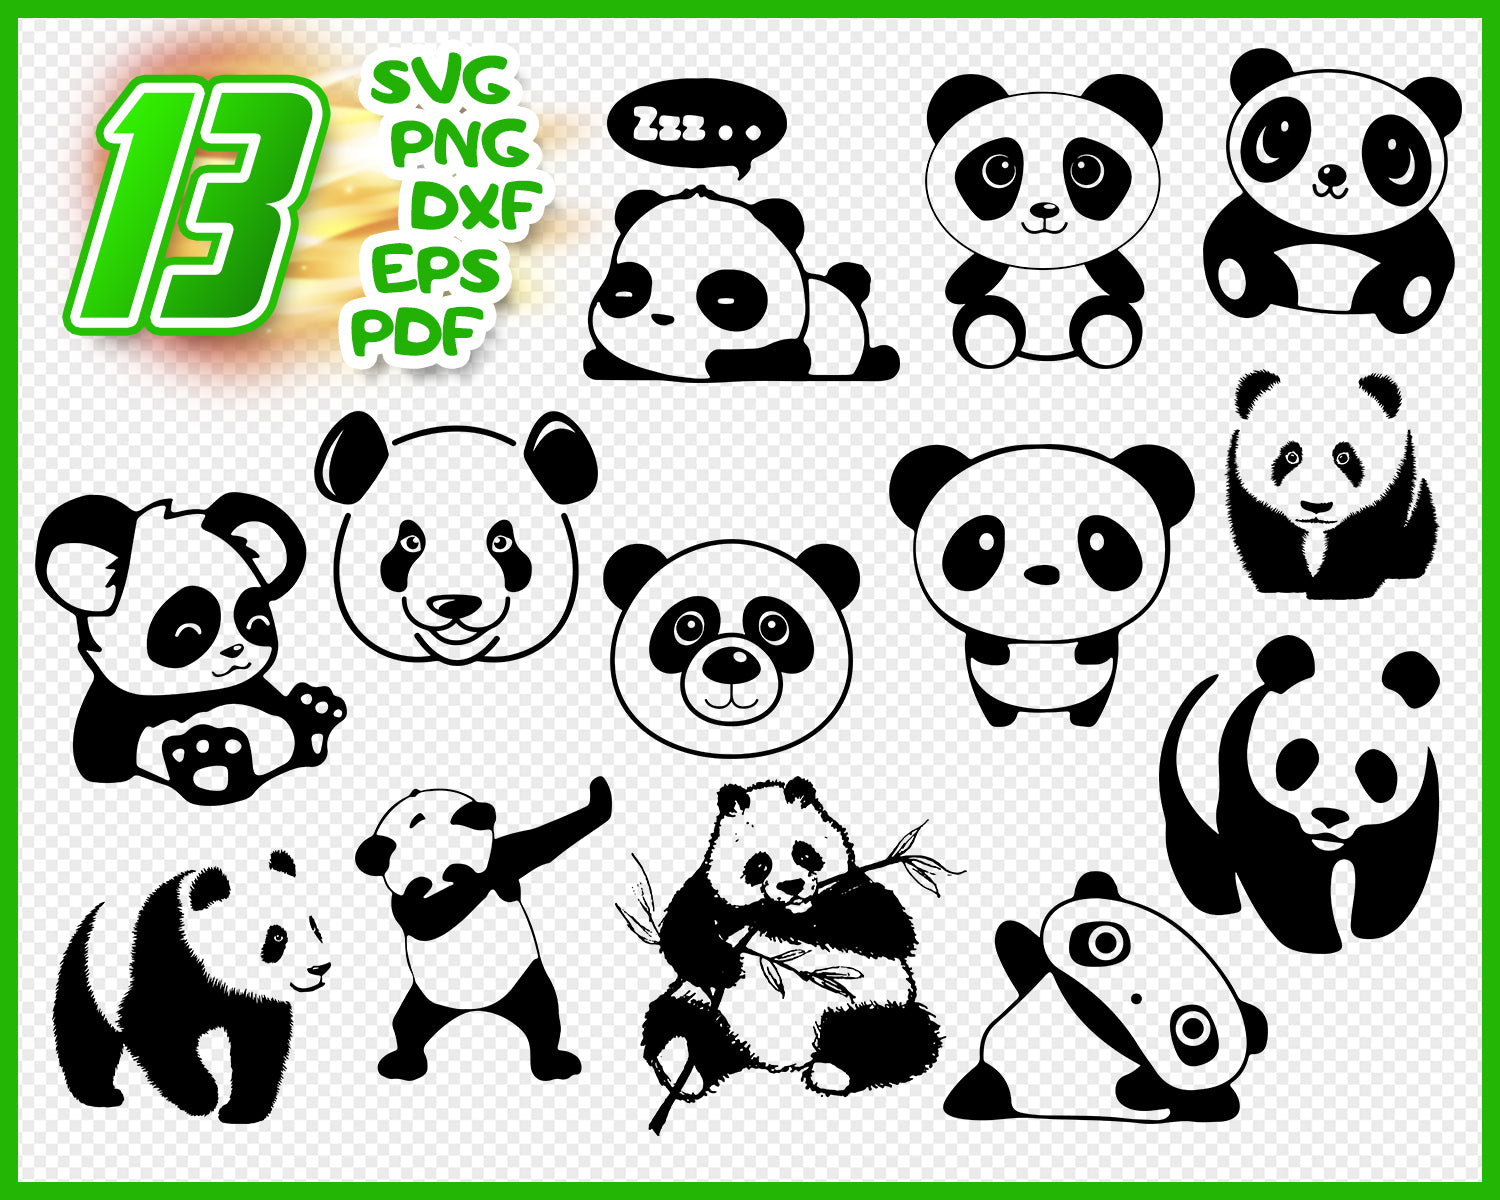 Download Clip Art Panda For Circut Funny Pand Svg Funny Cute Panda Svg Panda Svg Clipart Panda Silhouette Baby Panda Cute Panda Svg Panda Svg Circut Art Collectibles